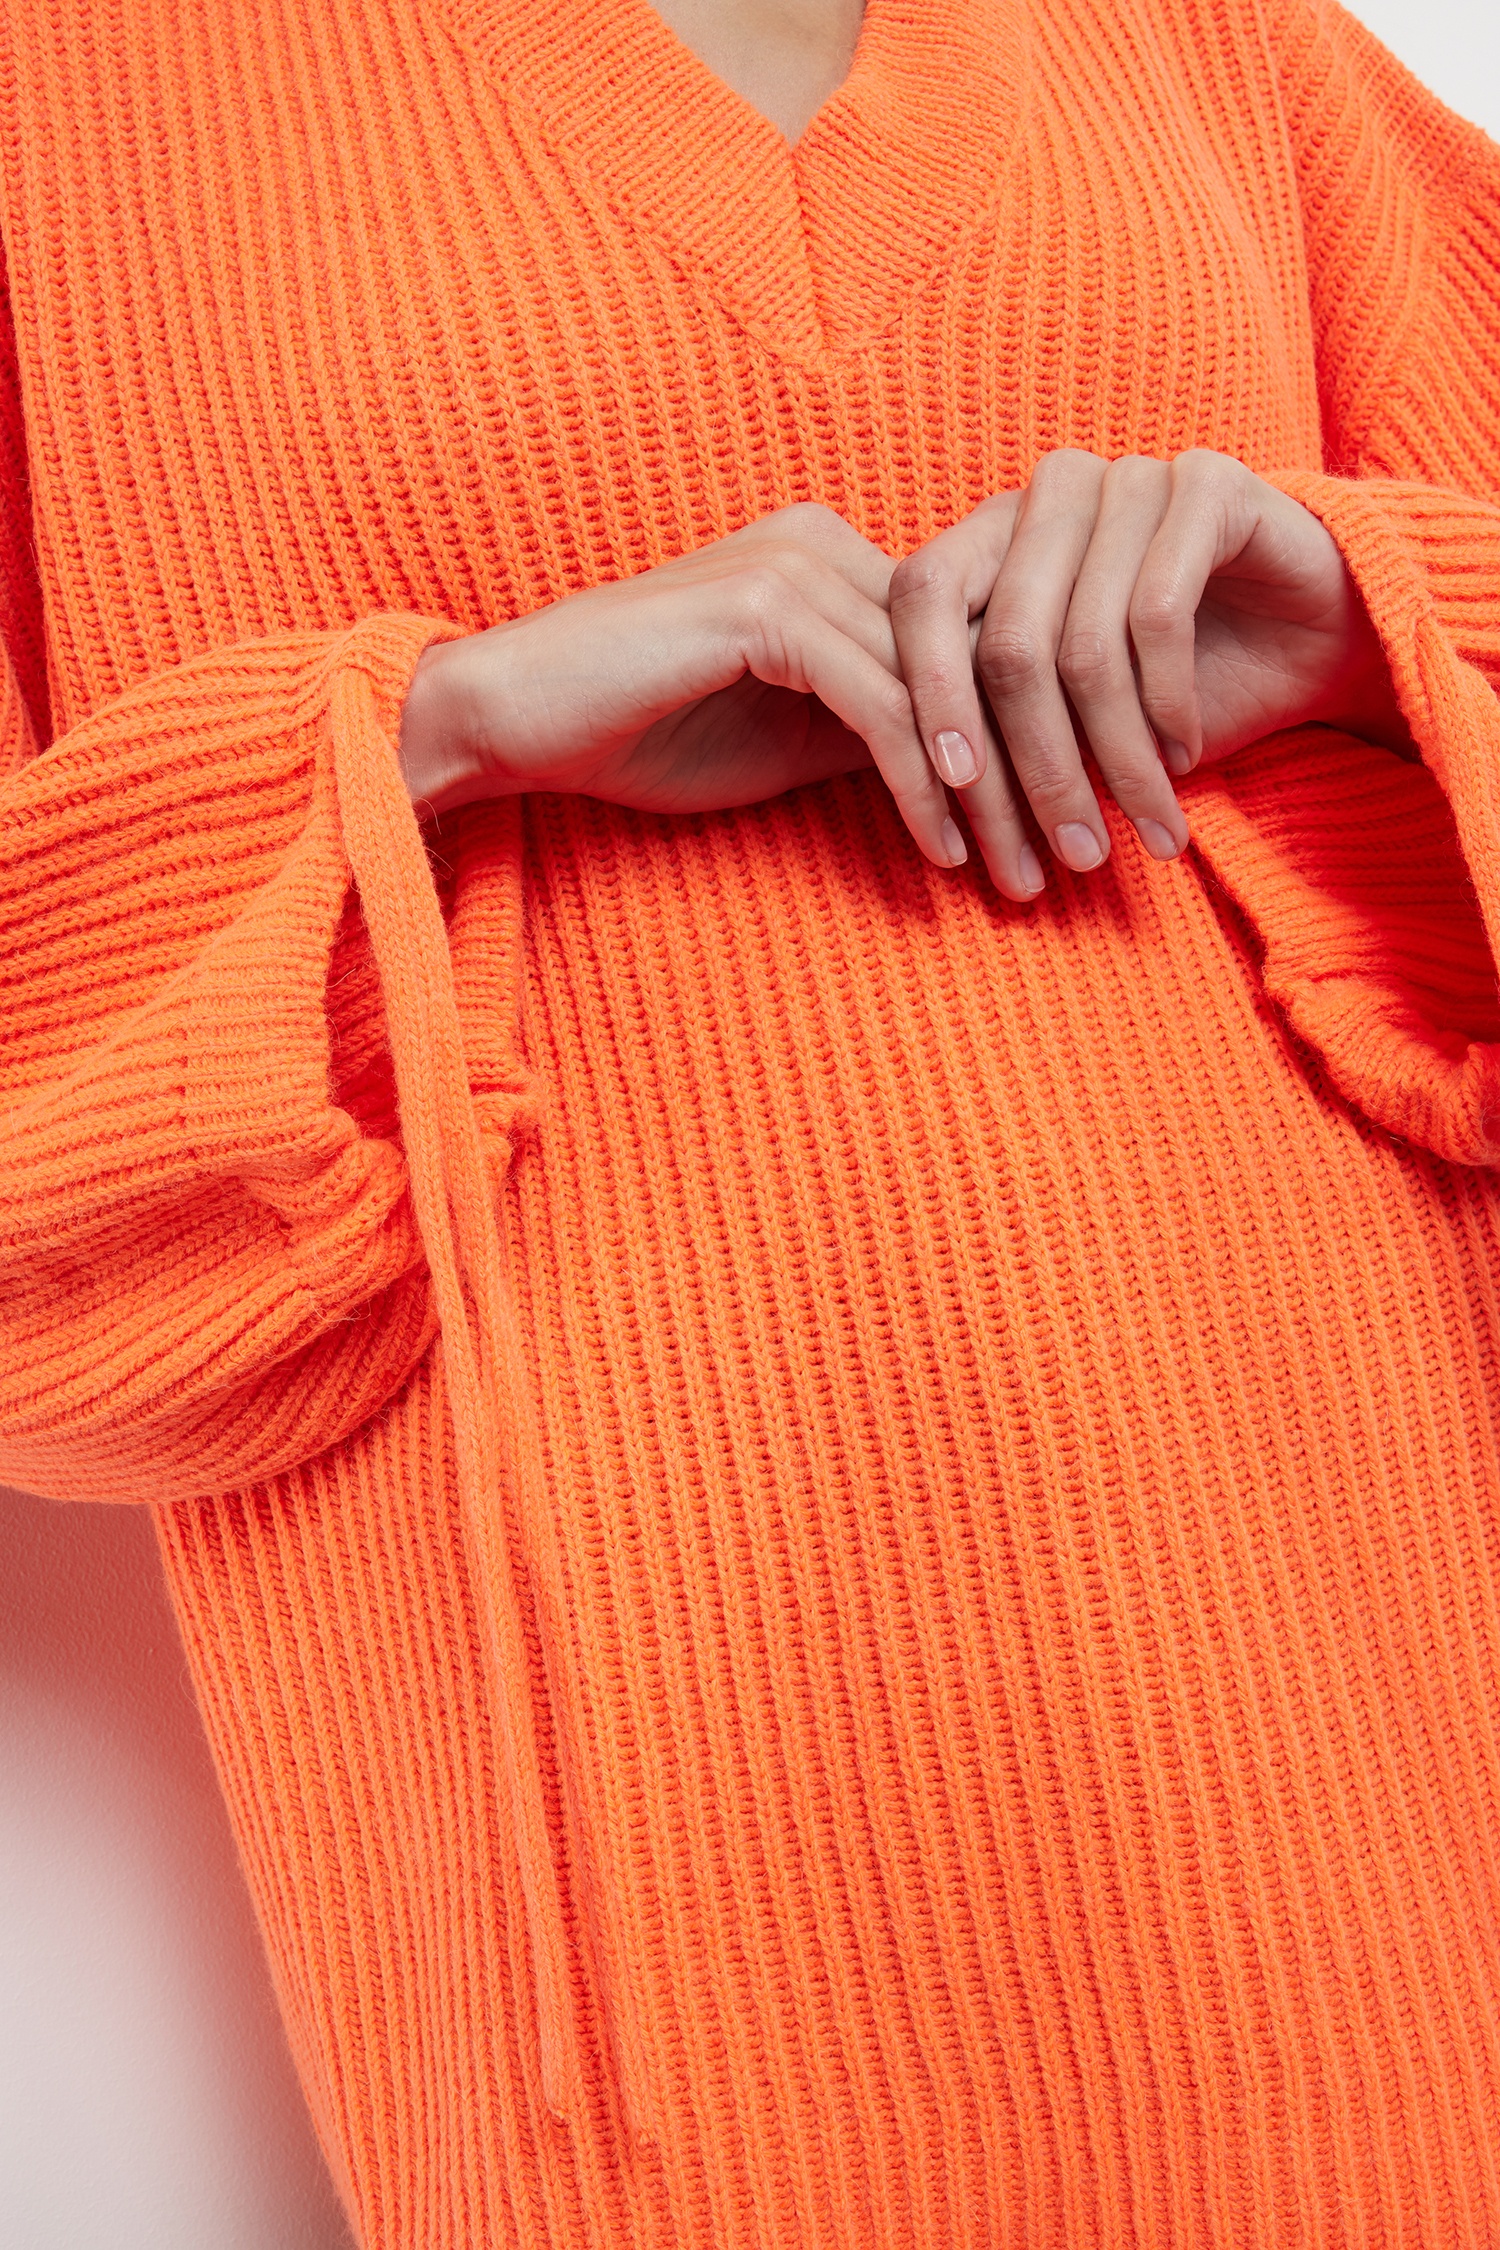 Оранжевый пуловер